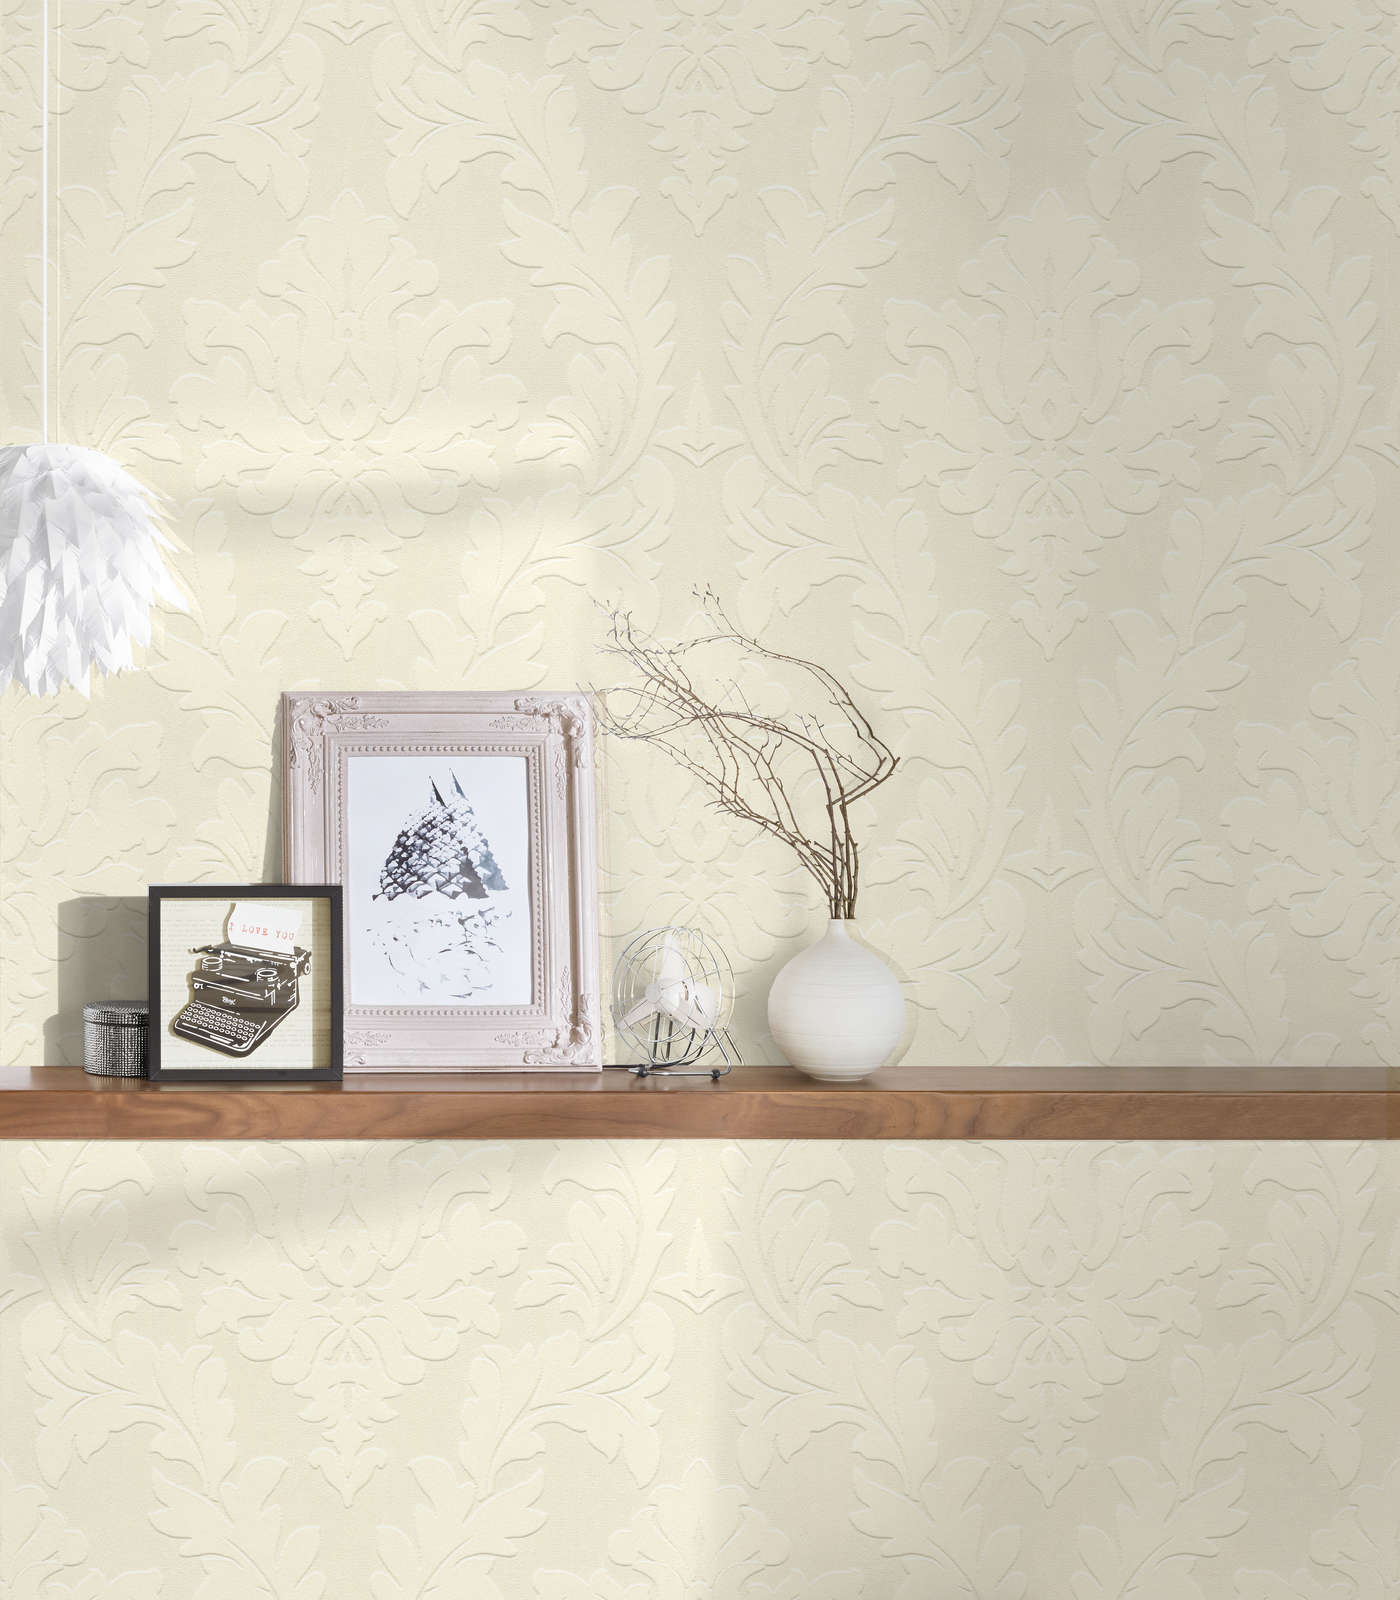             Baroque wallpaper with metallic effect & texture design - cream
        